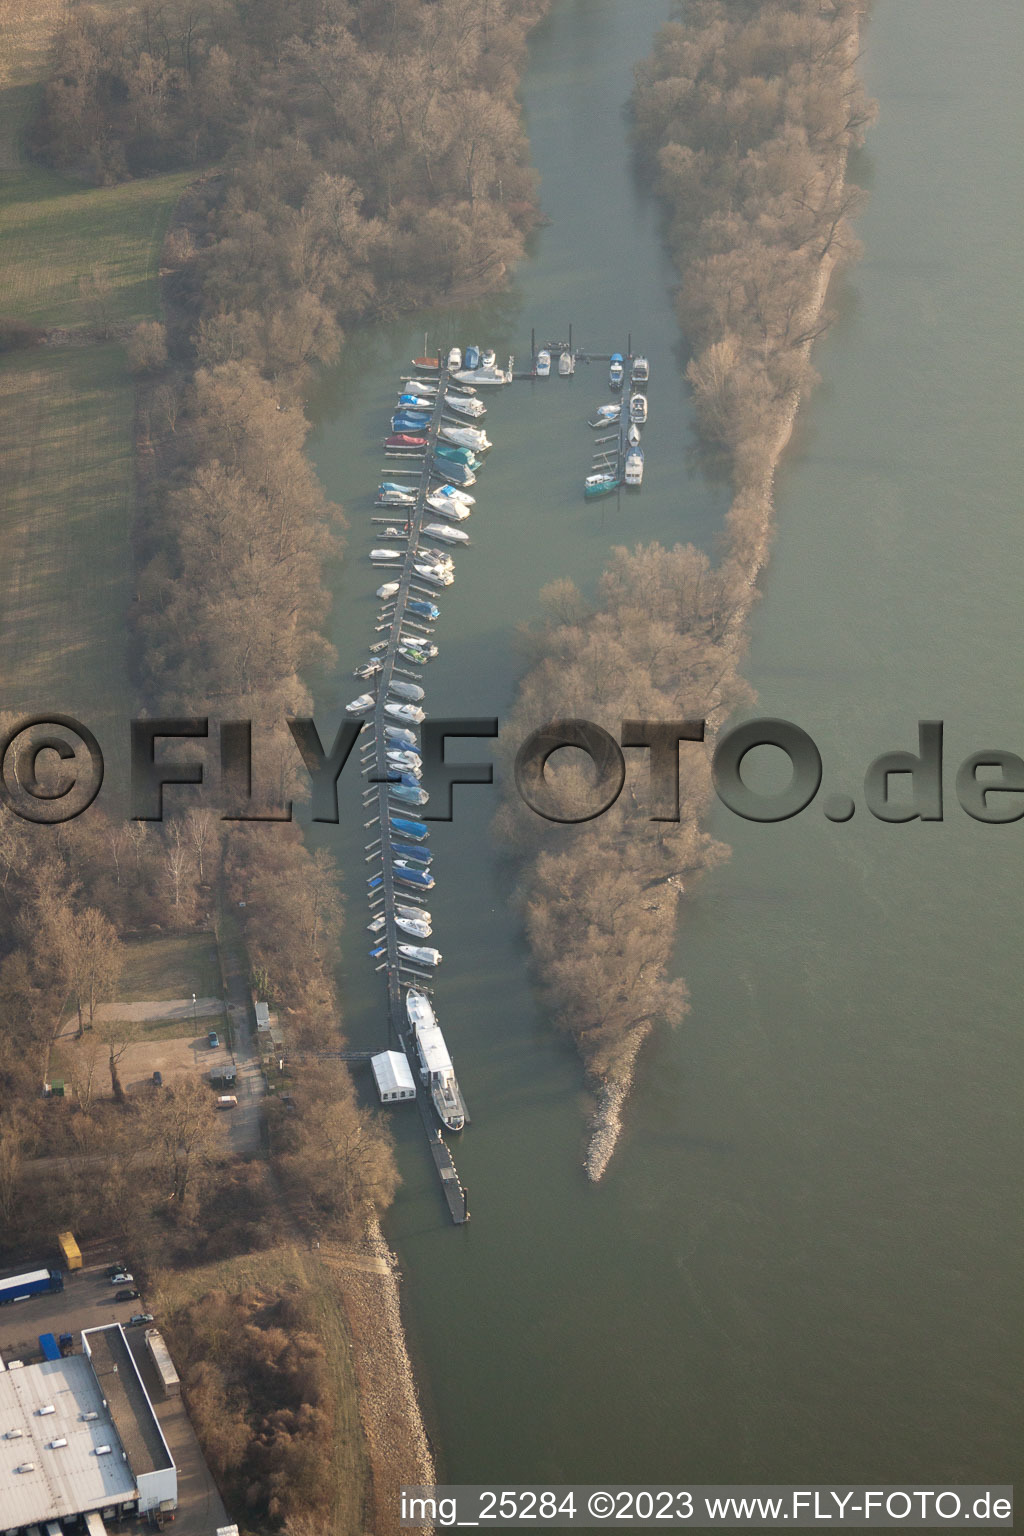 Motorboat harbor in the district Rheinau in Mannheim in the state Baden-Wuerttemberg, Germany